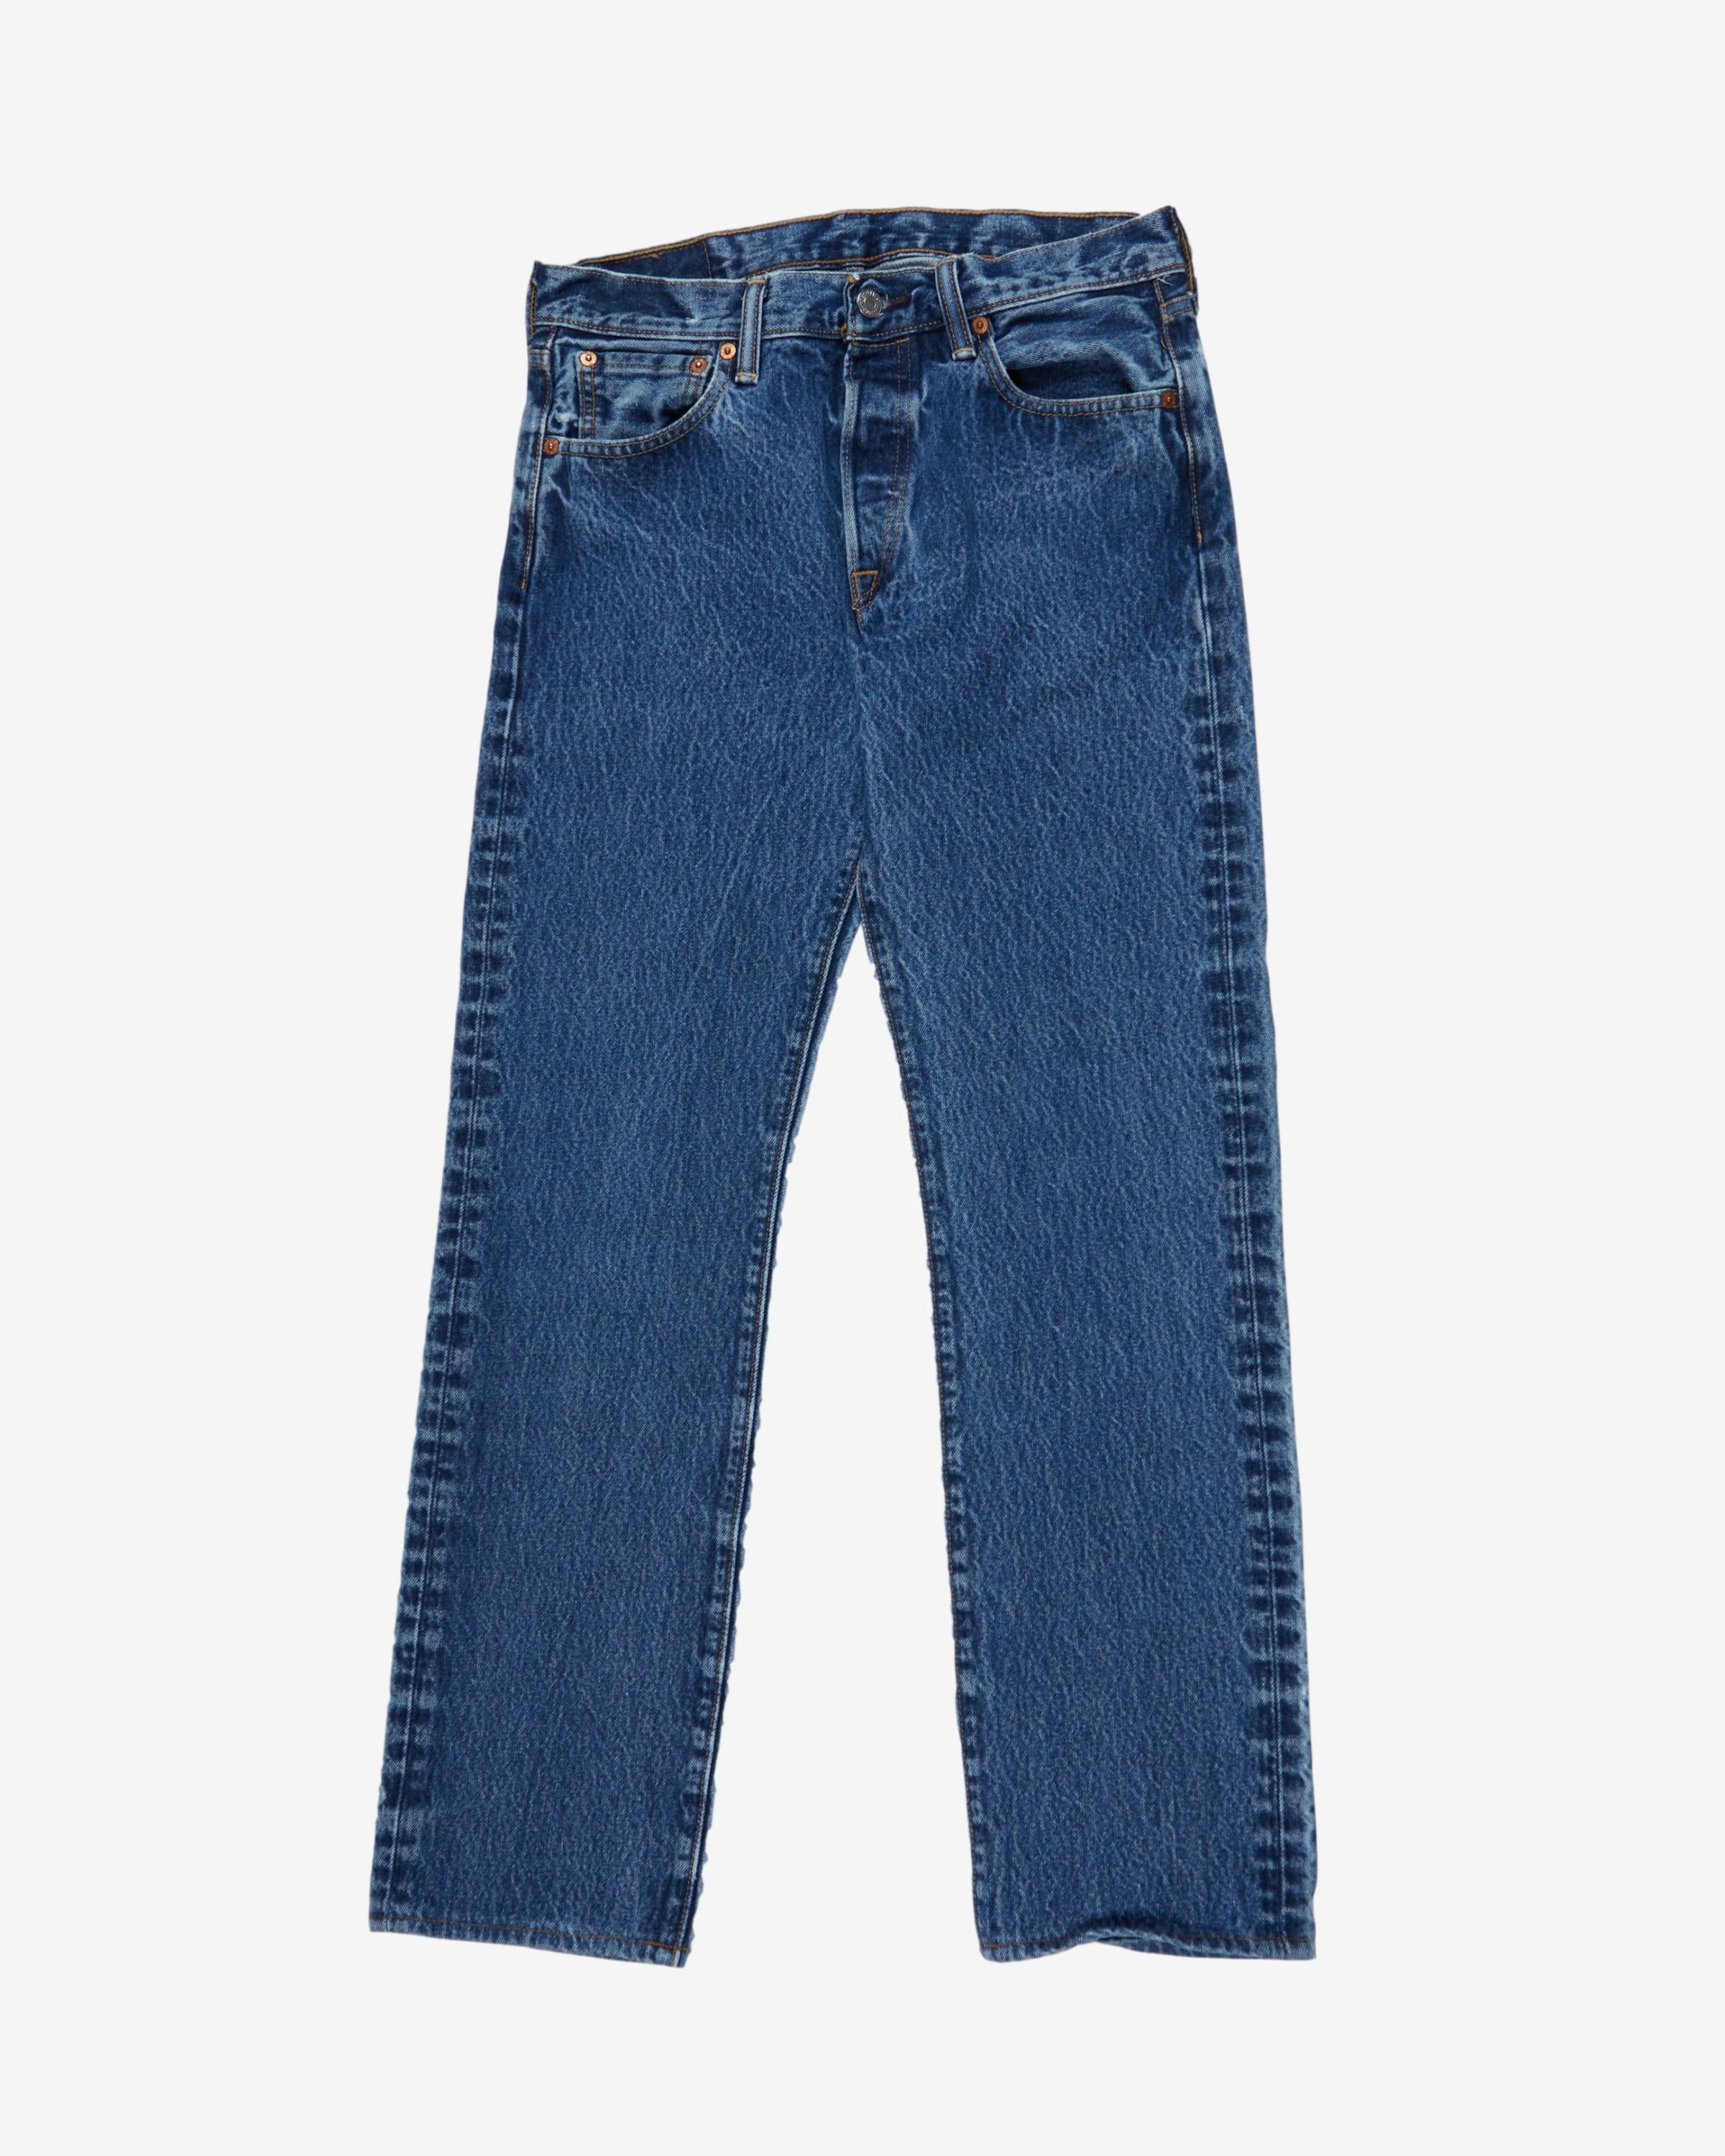 Levi's 501 Dark Blue Patterned Denim Jeans - W30 L32